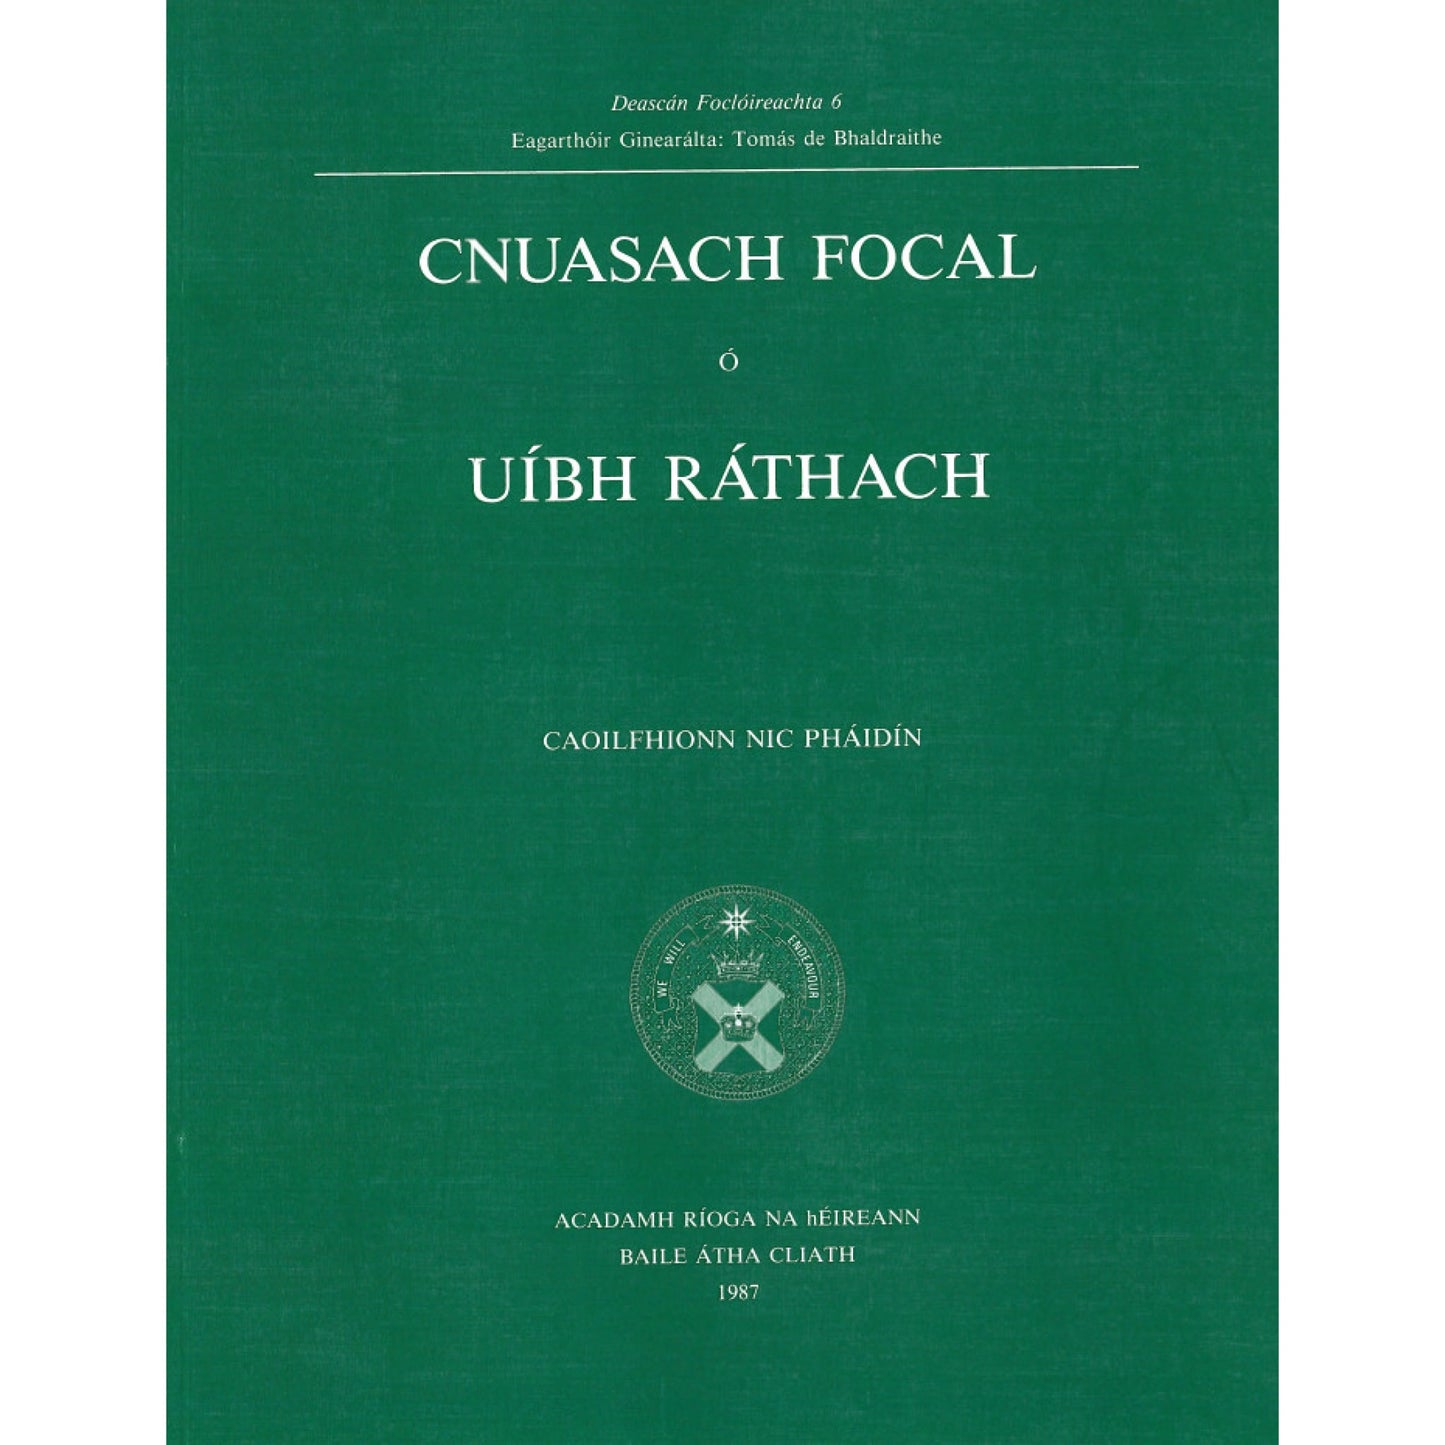 cnuasach focal o uíbh rathach cover